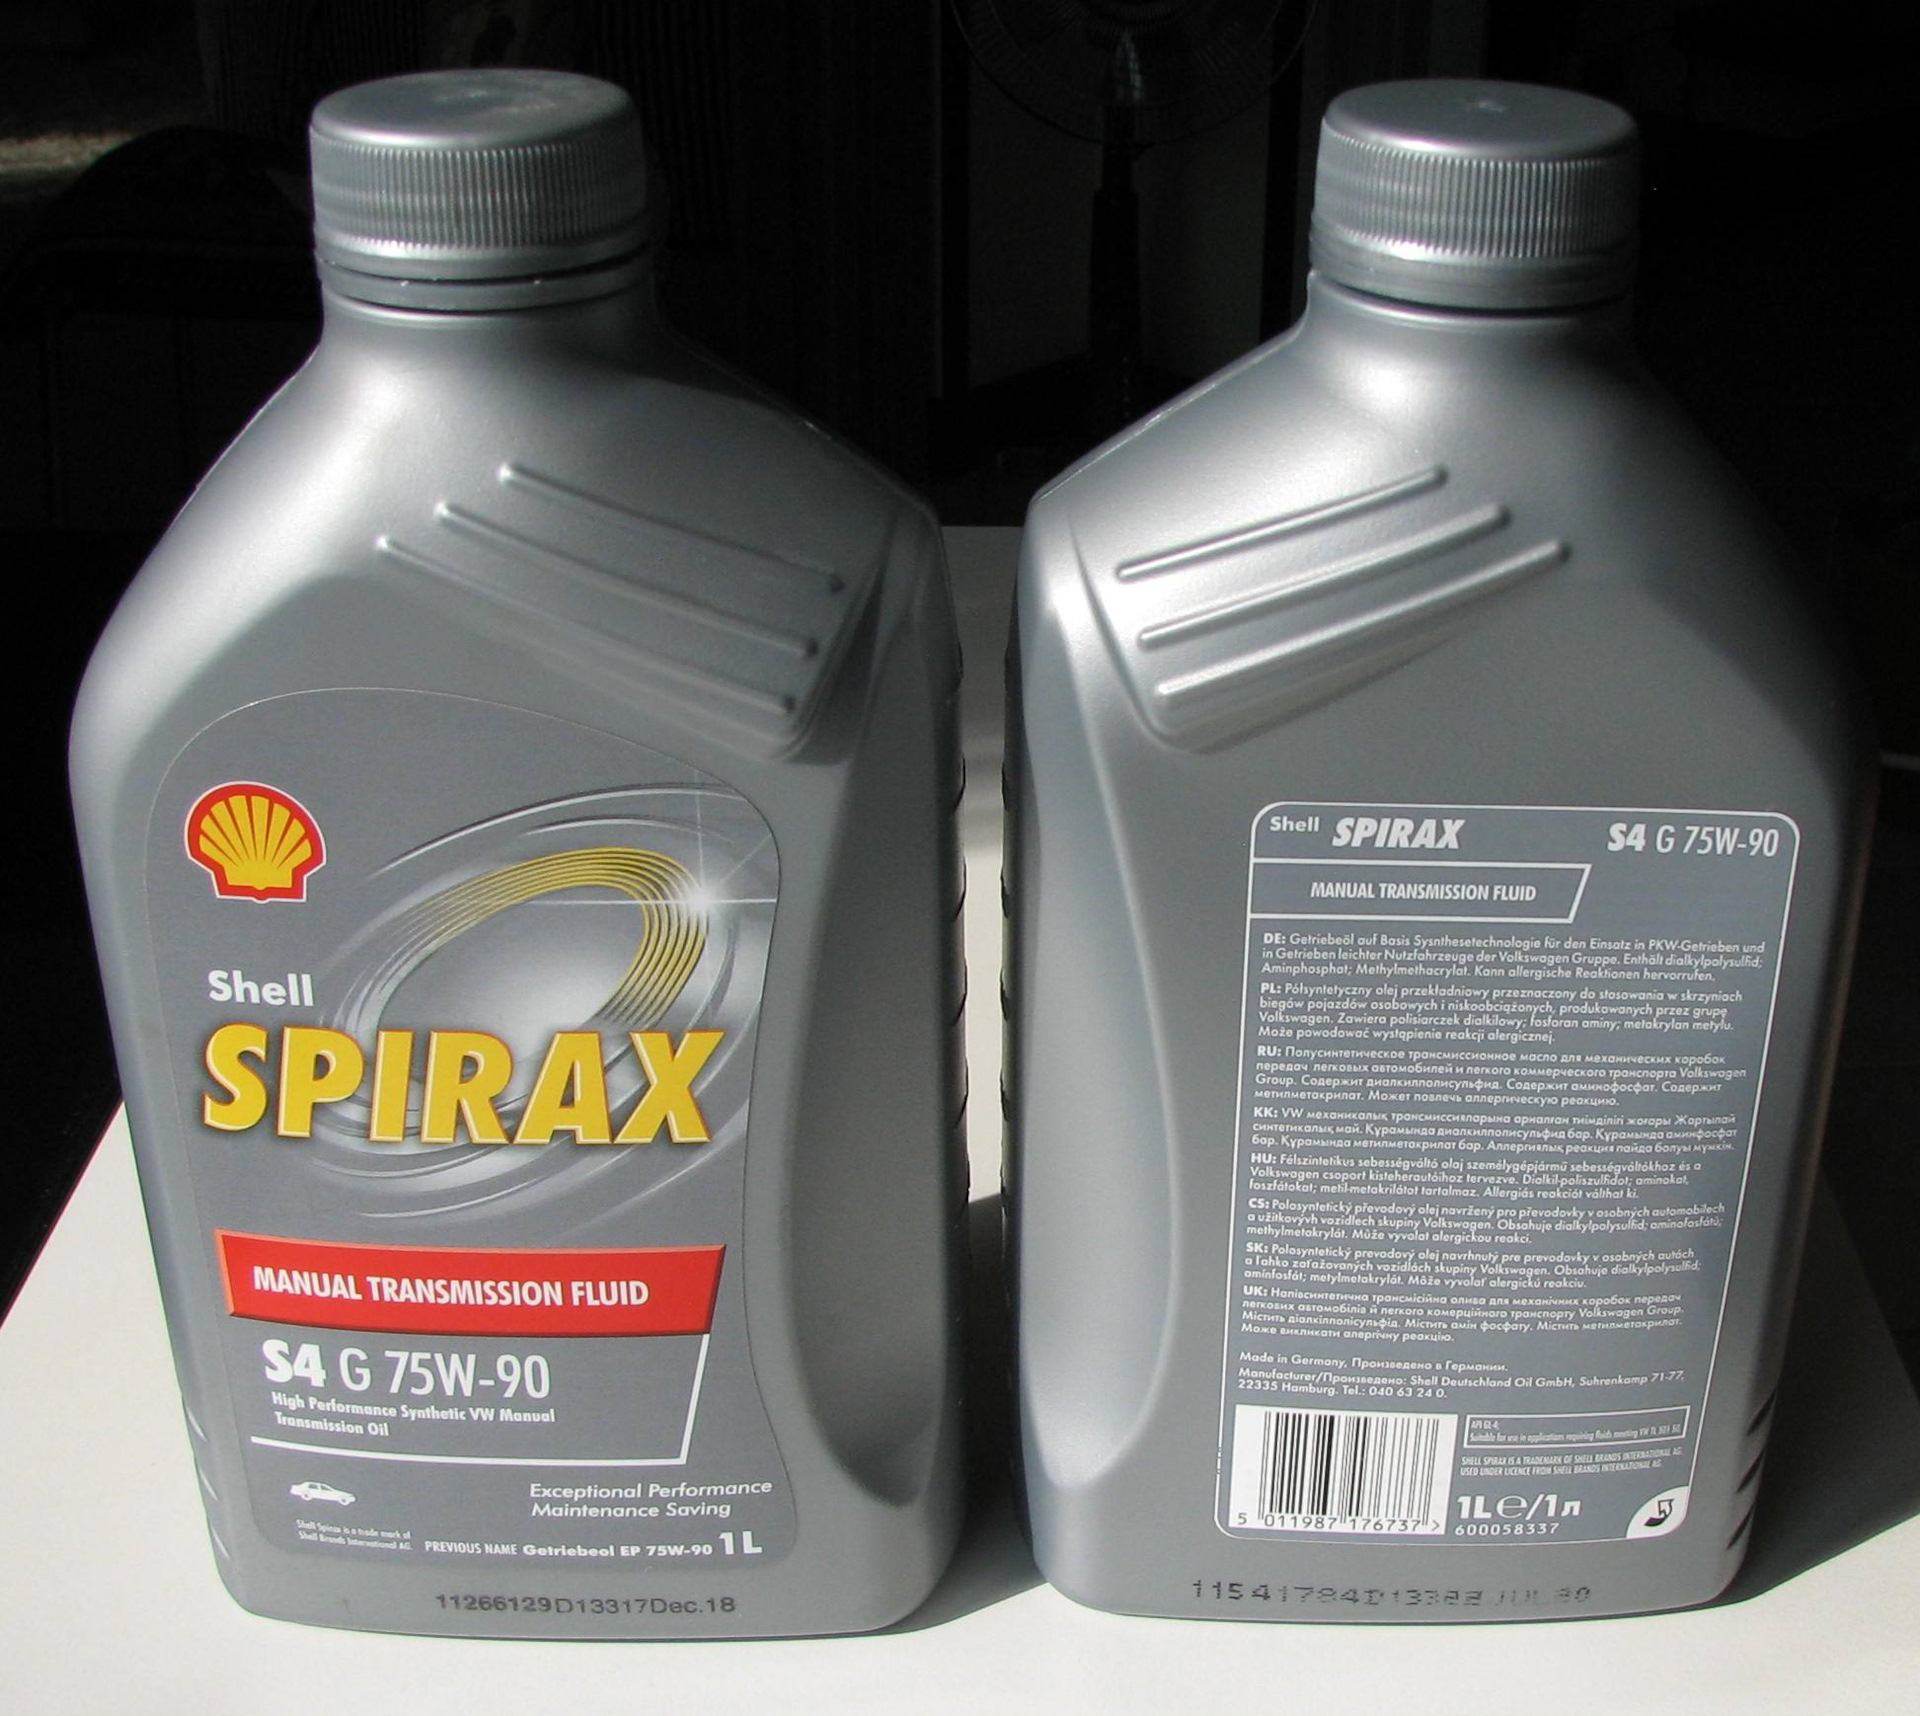 Shell Spirax s4 g 75w-90. Shell Spirax s4 at 75w-90.